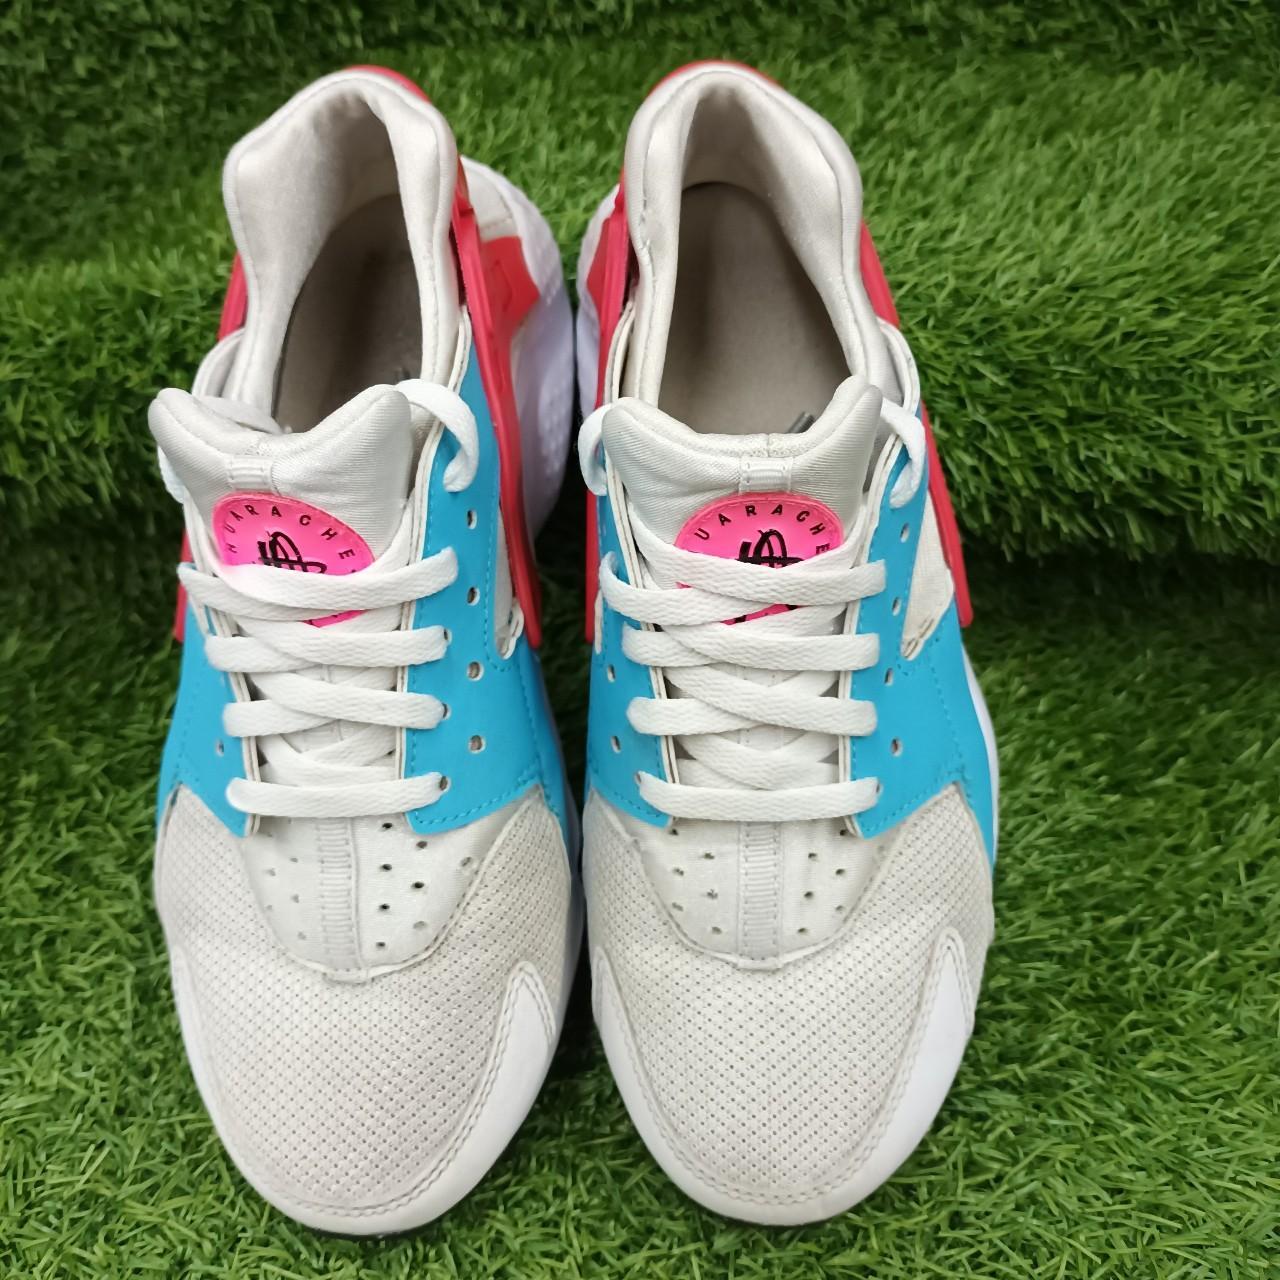 Nike Air Huarache Run Women's Pink Suede - Depop